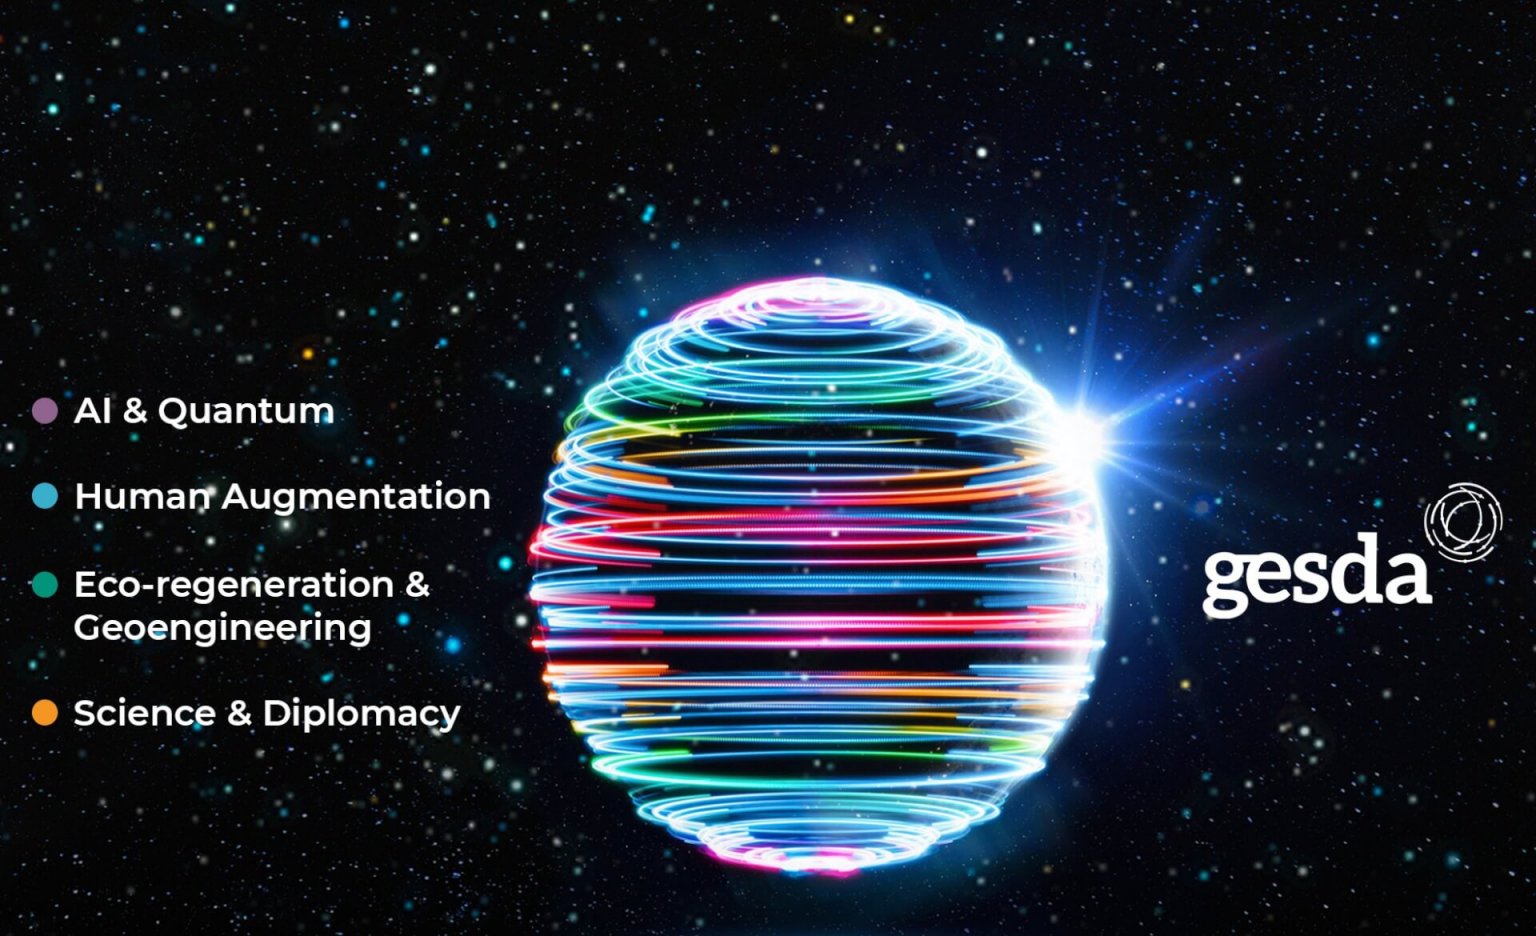 Junte-se ao GESDA Science Breakthrough Radar e compartilhe sua perspectiva sobre futuros avanços científicos